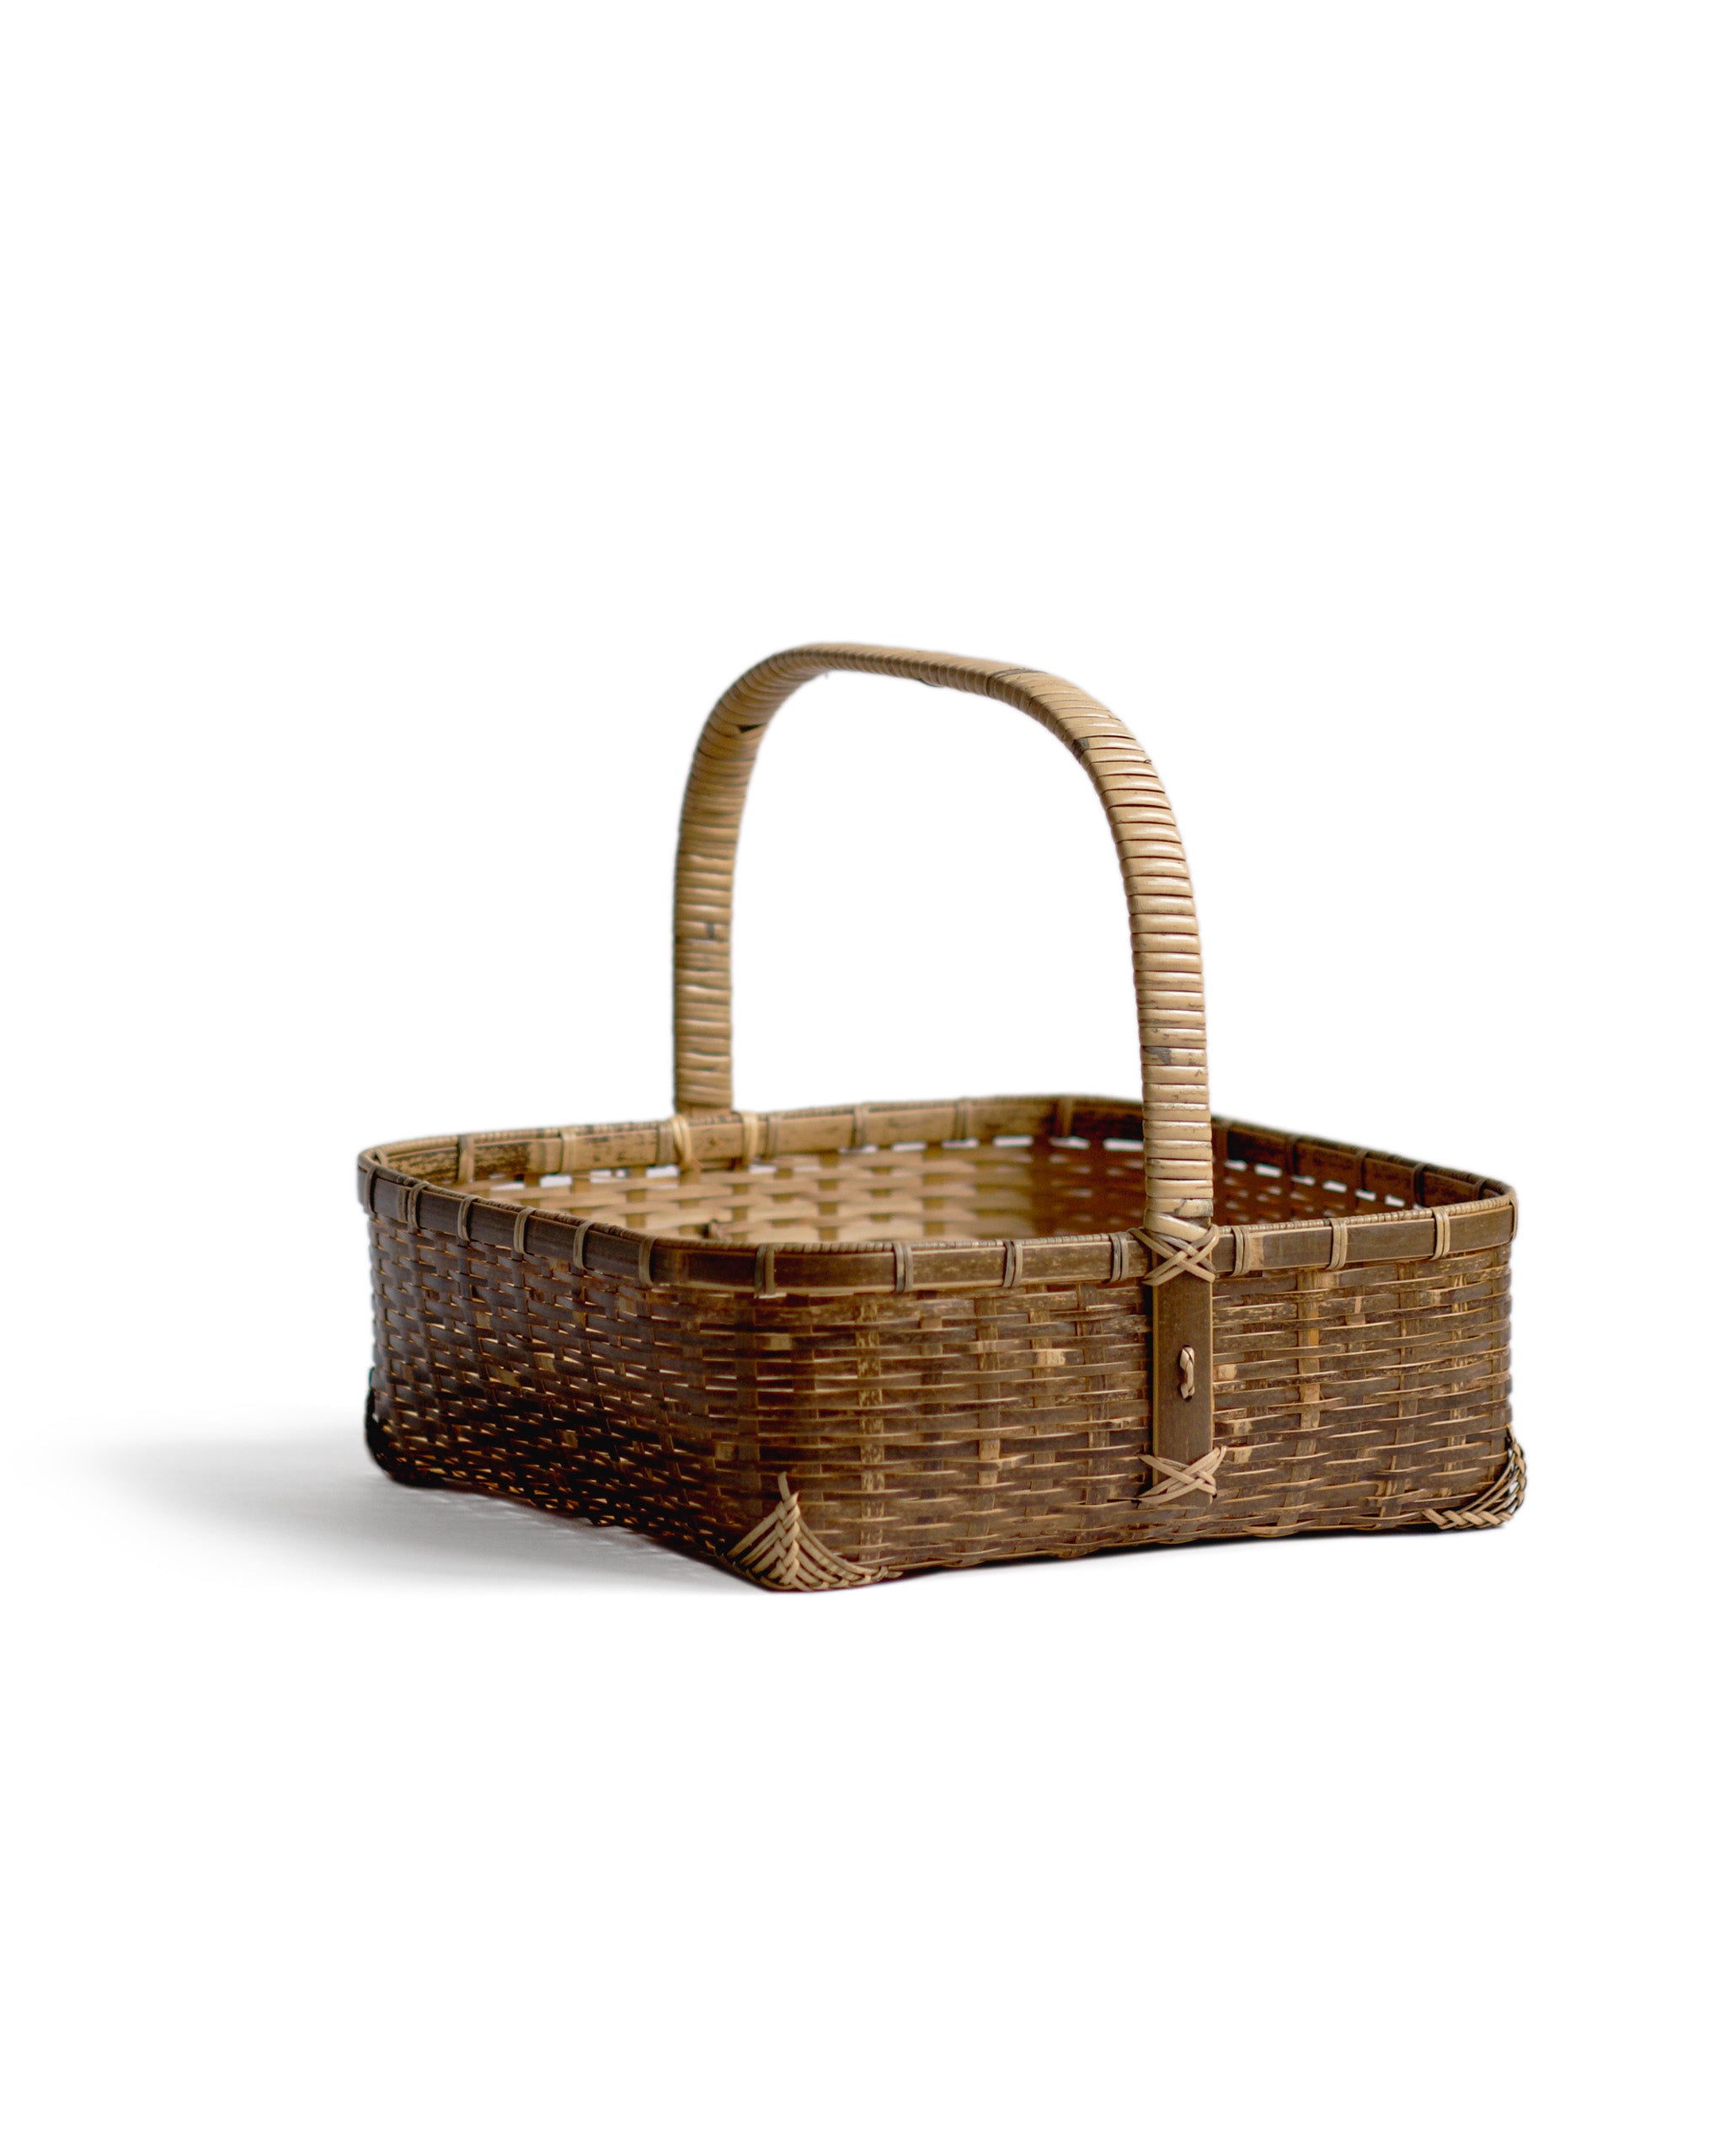 Silhouetted angled image of square toradake bread basket with handle by Kohchosai Kosuga against white background.